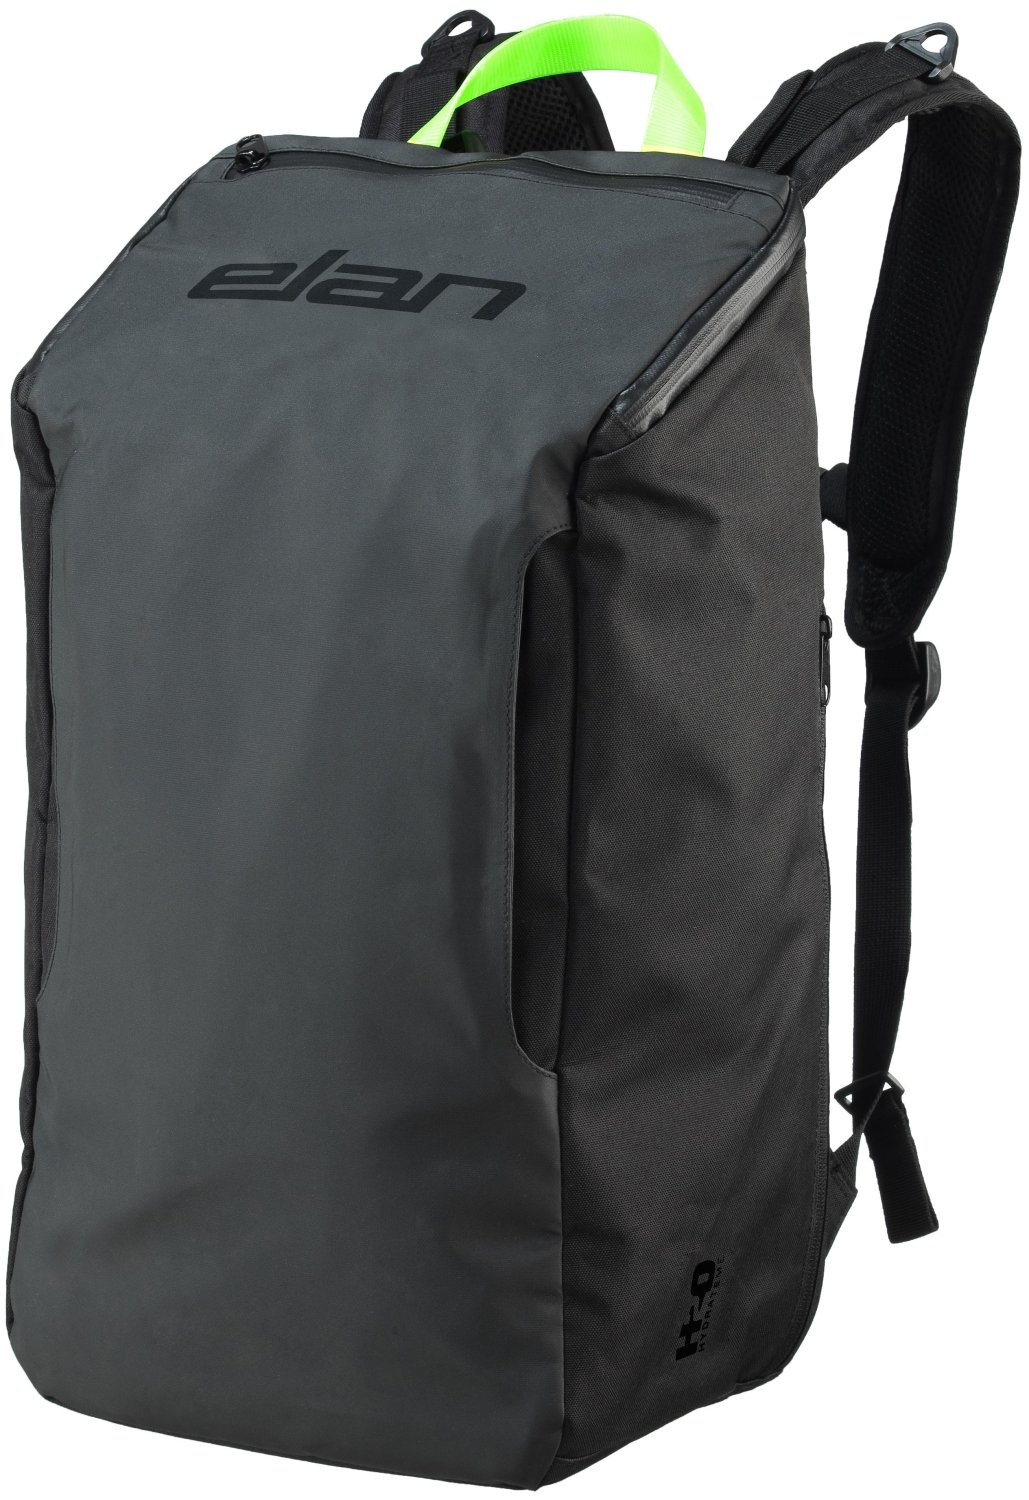 Рюкзак велосипедный ELAN AGT BACKPACK RACE, 25 л, 2020-21, CG592419 рюкзак j gel essential classic backpack